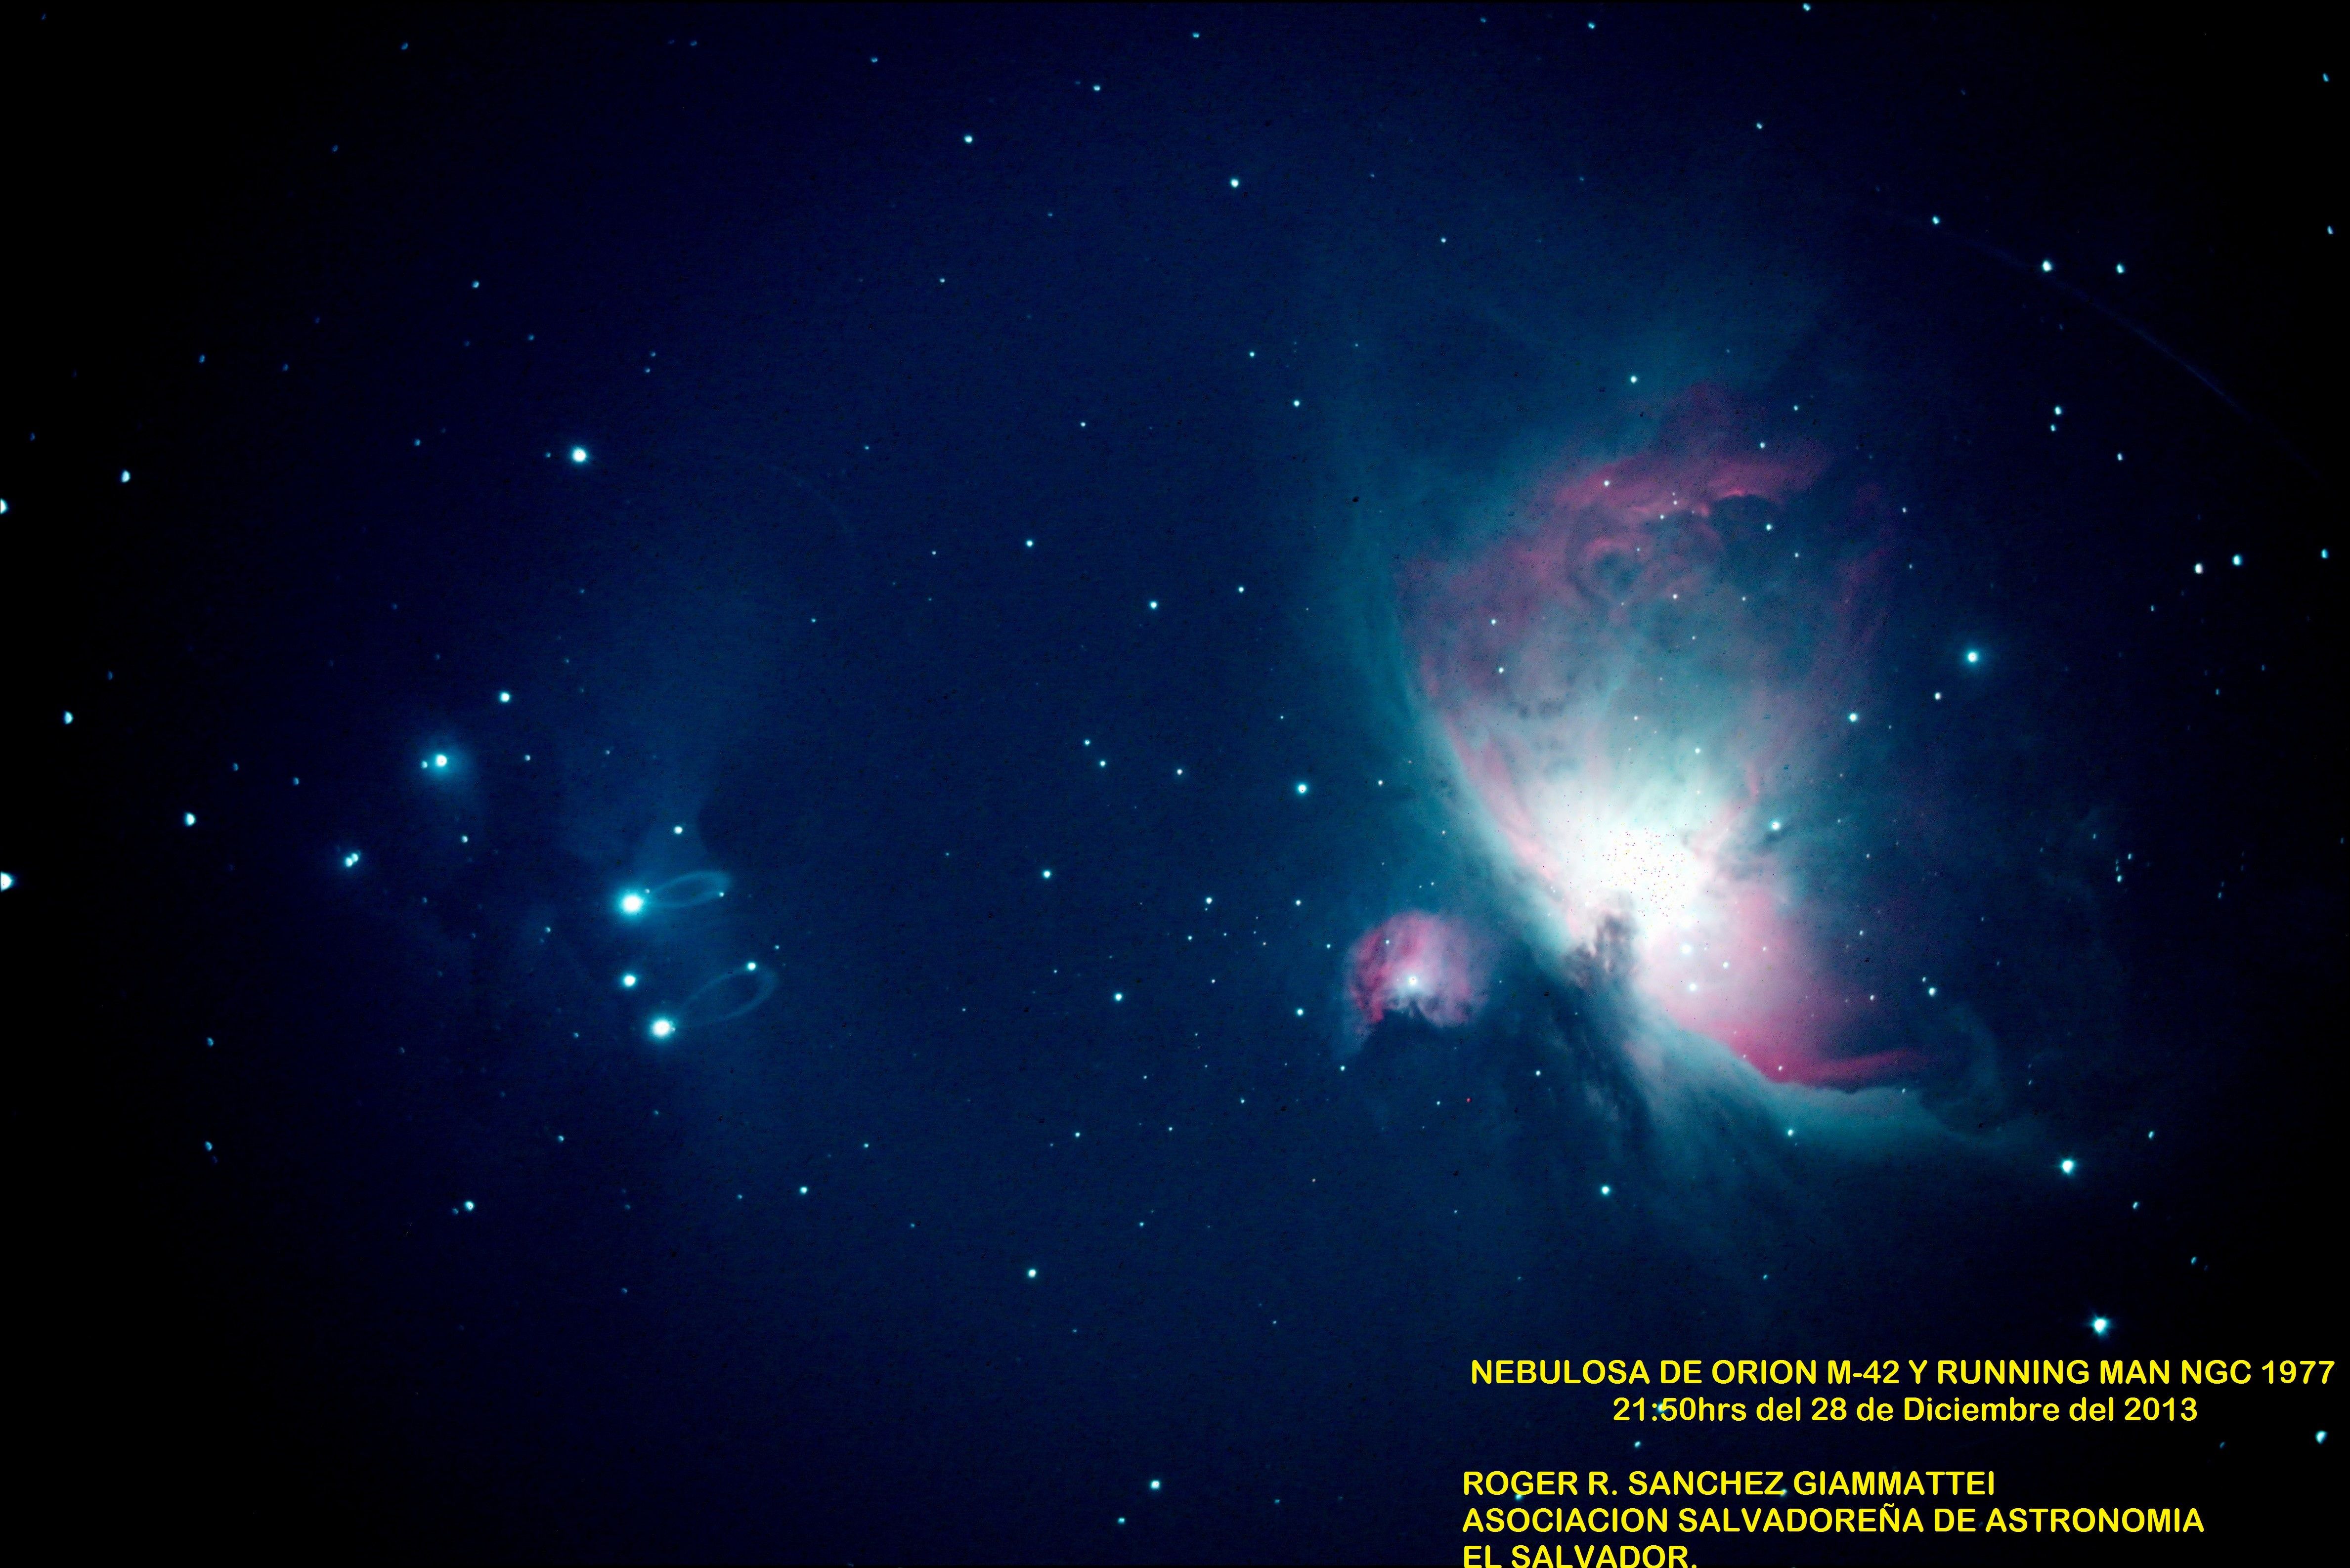 Orion Nebula M42 and Running Man NGC1977